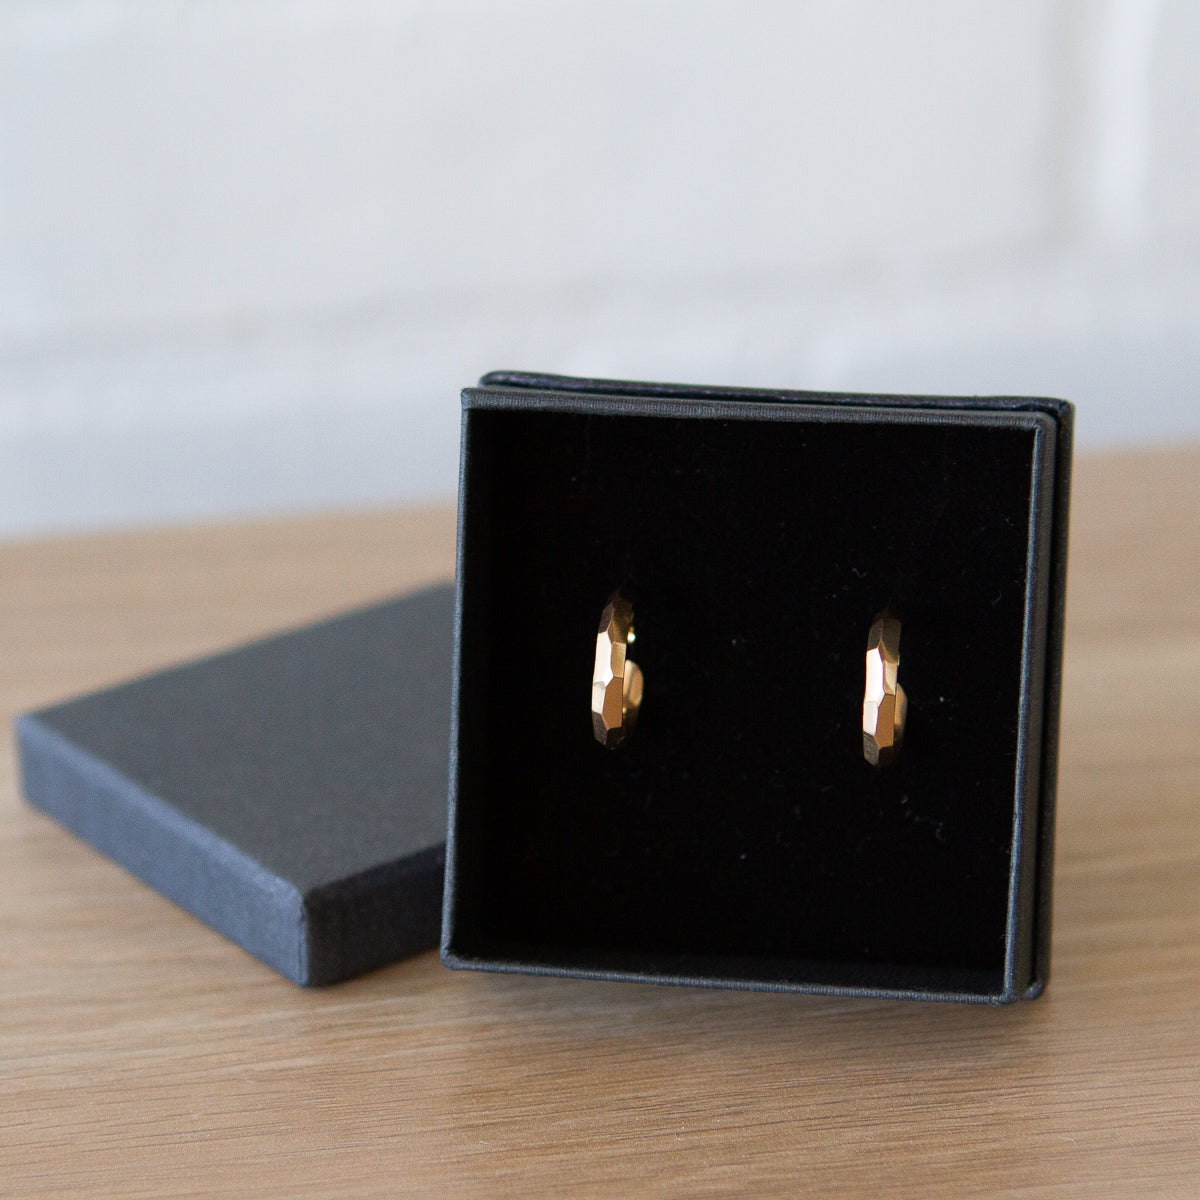 gold faceted denali hoop earrings in a gift box